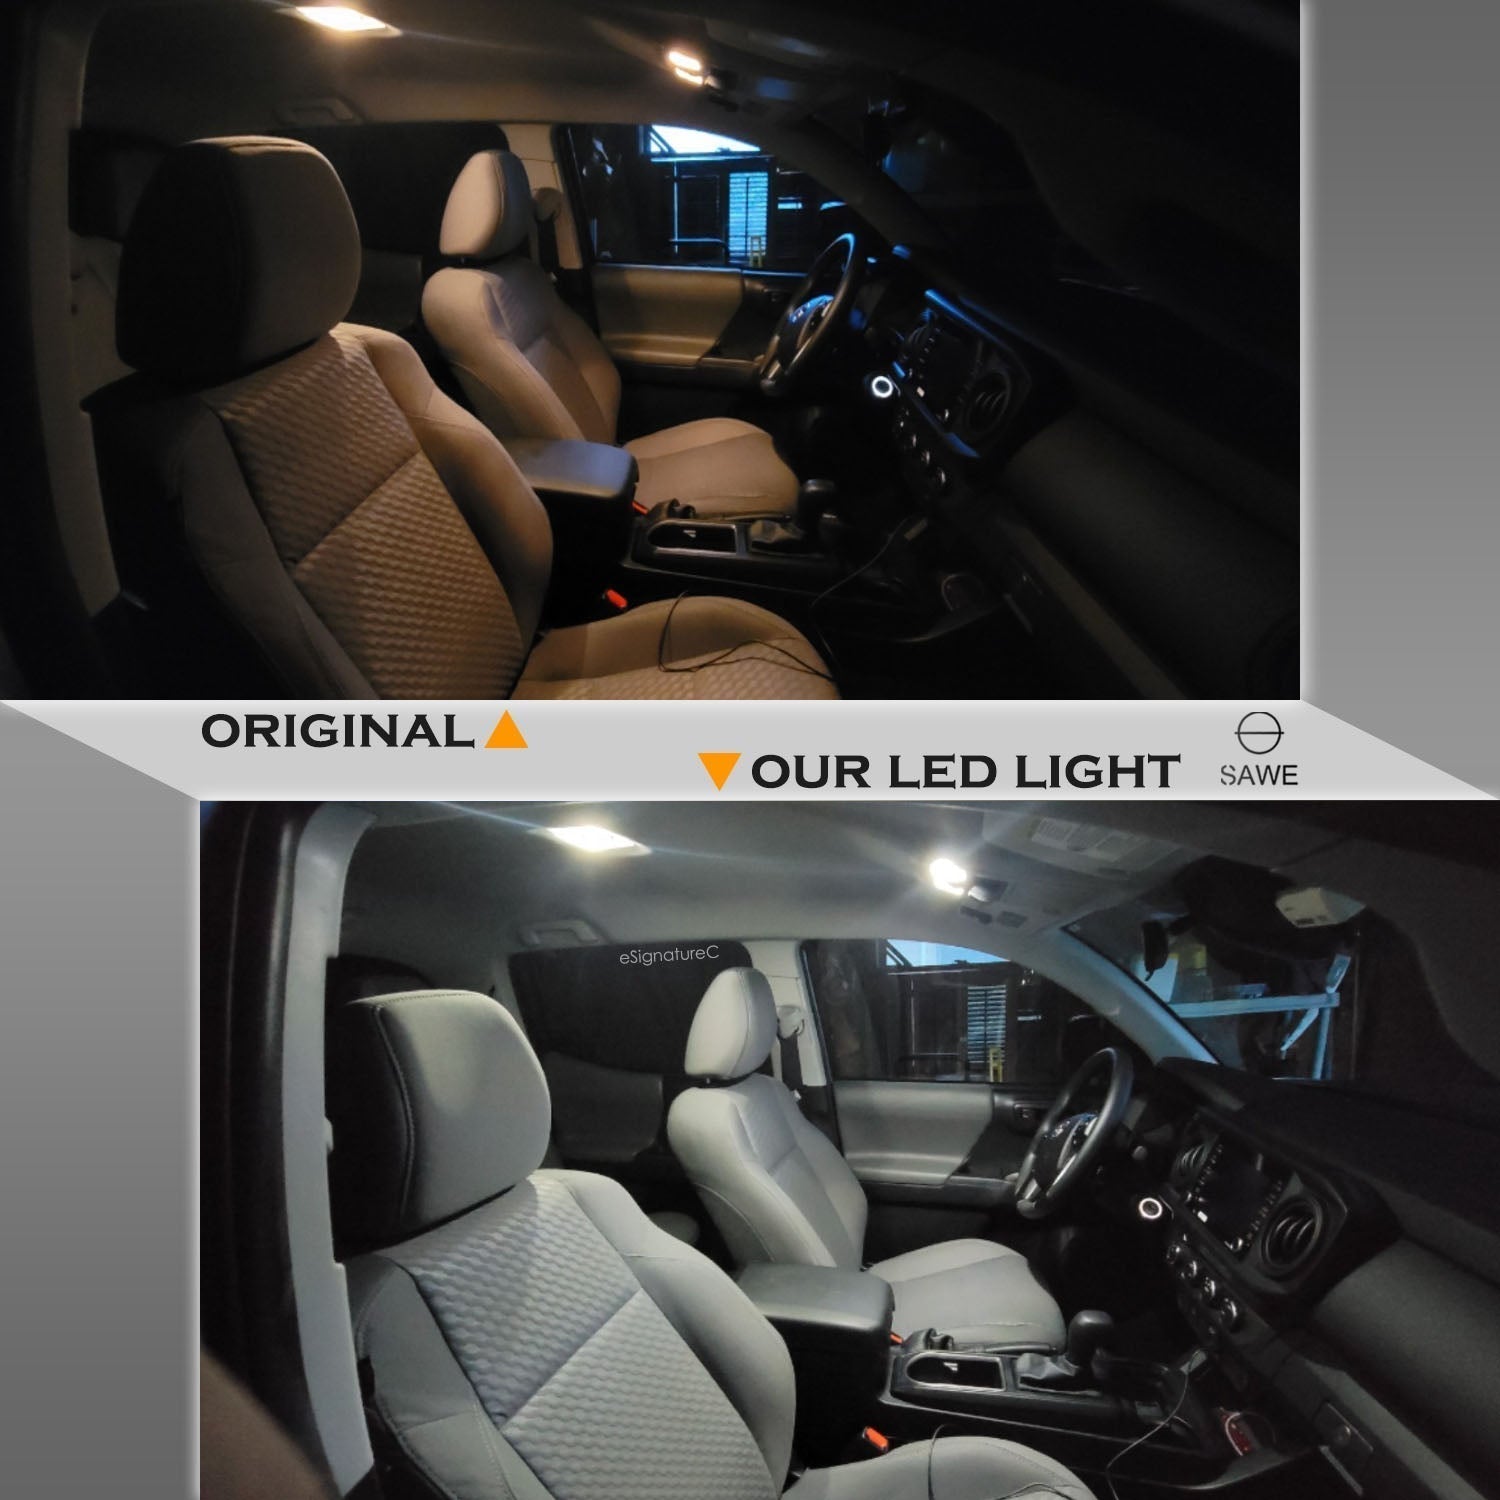 For Volkswagen Beetle Interior LED Lights - Dome & Map Light Bulbs Package Kit for 2012 - 2017 - White